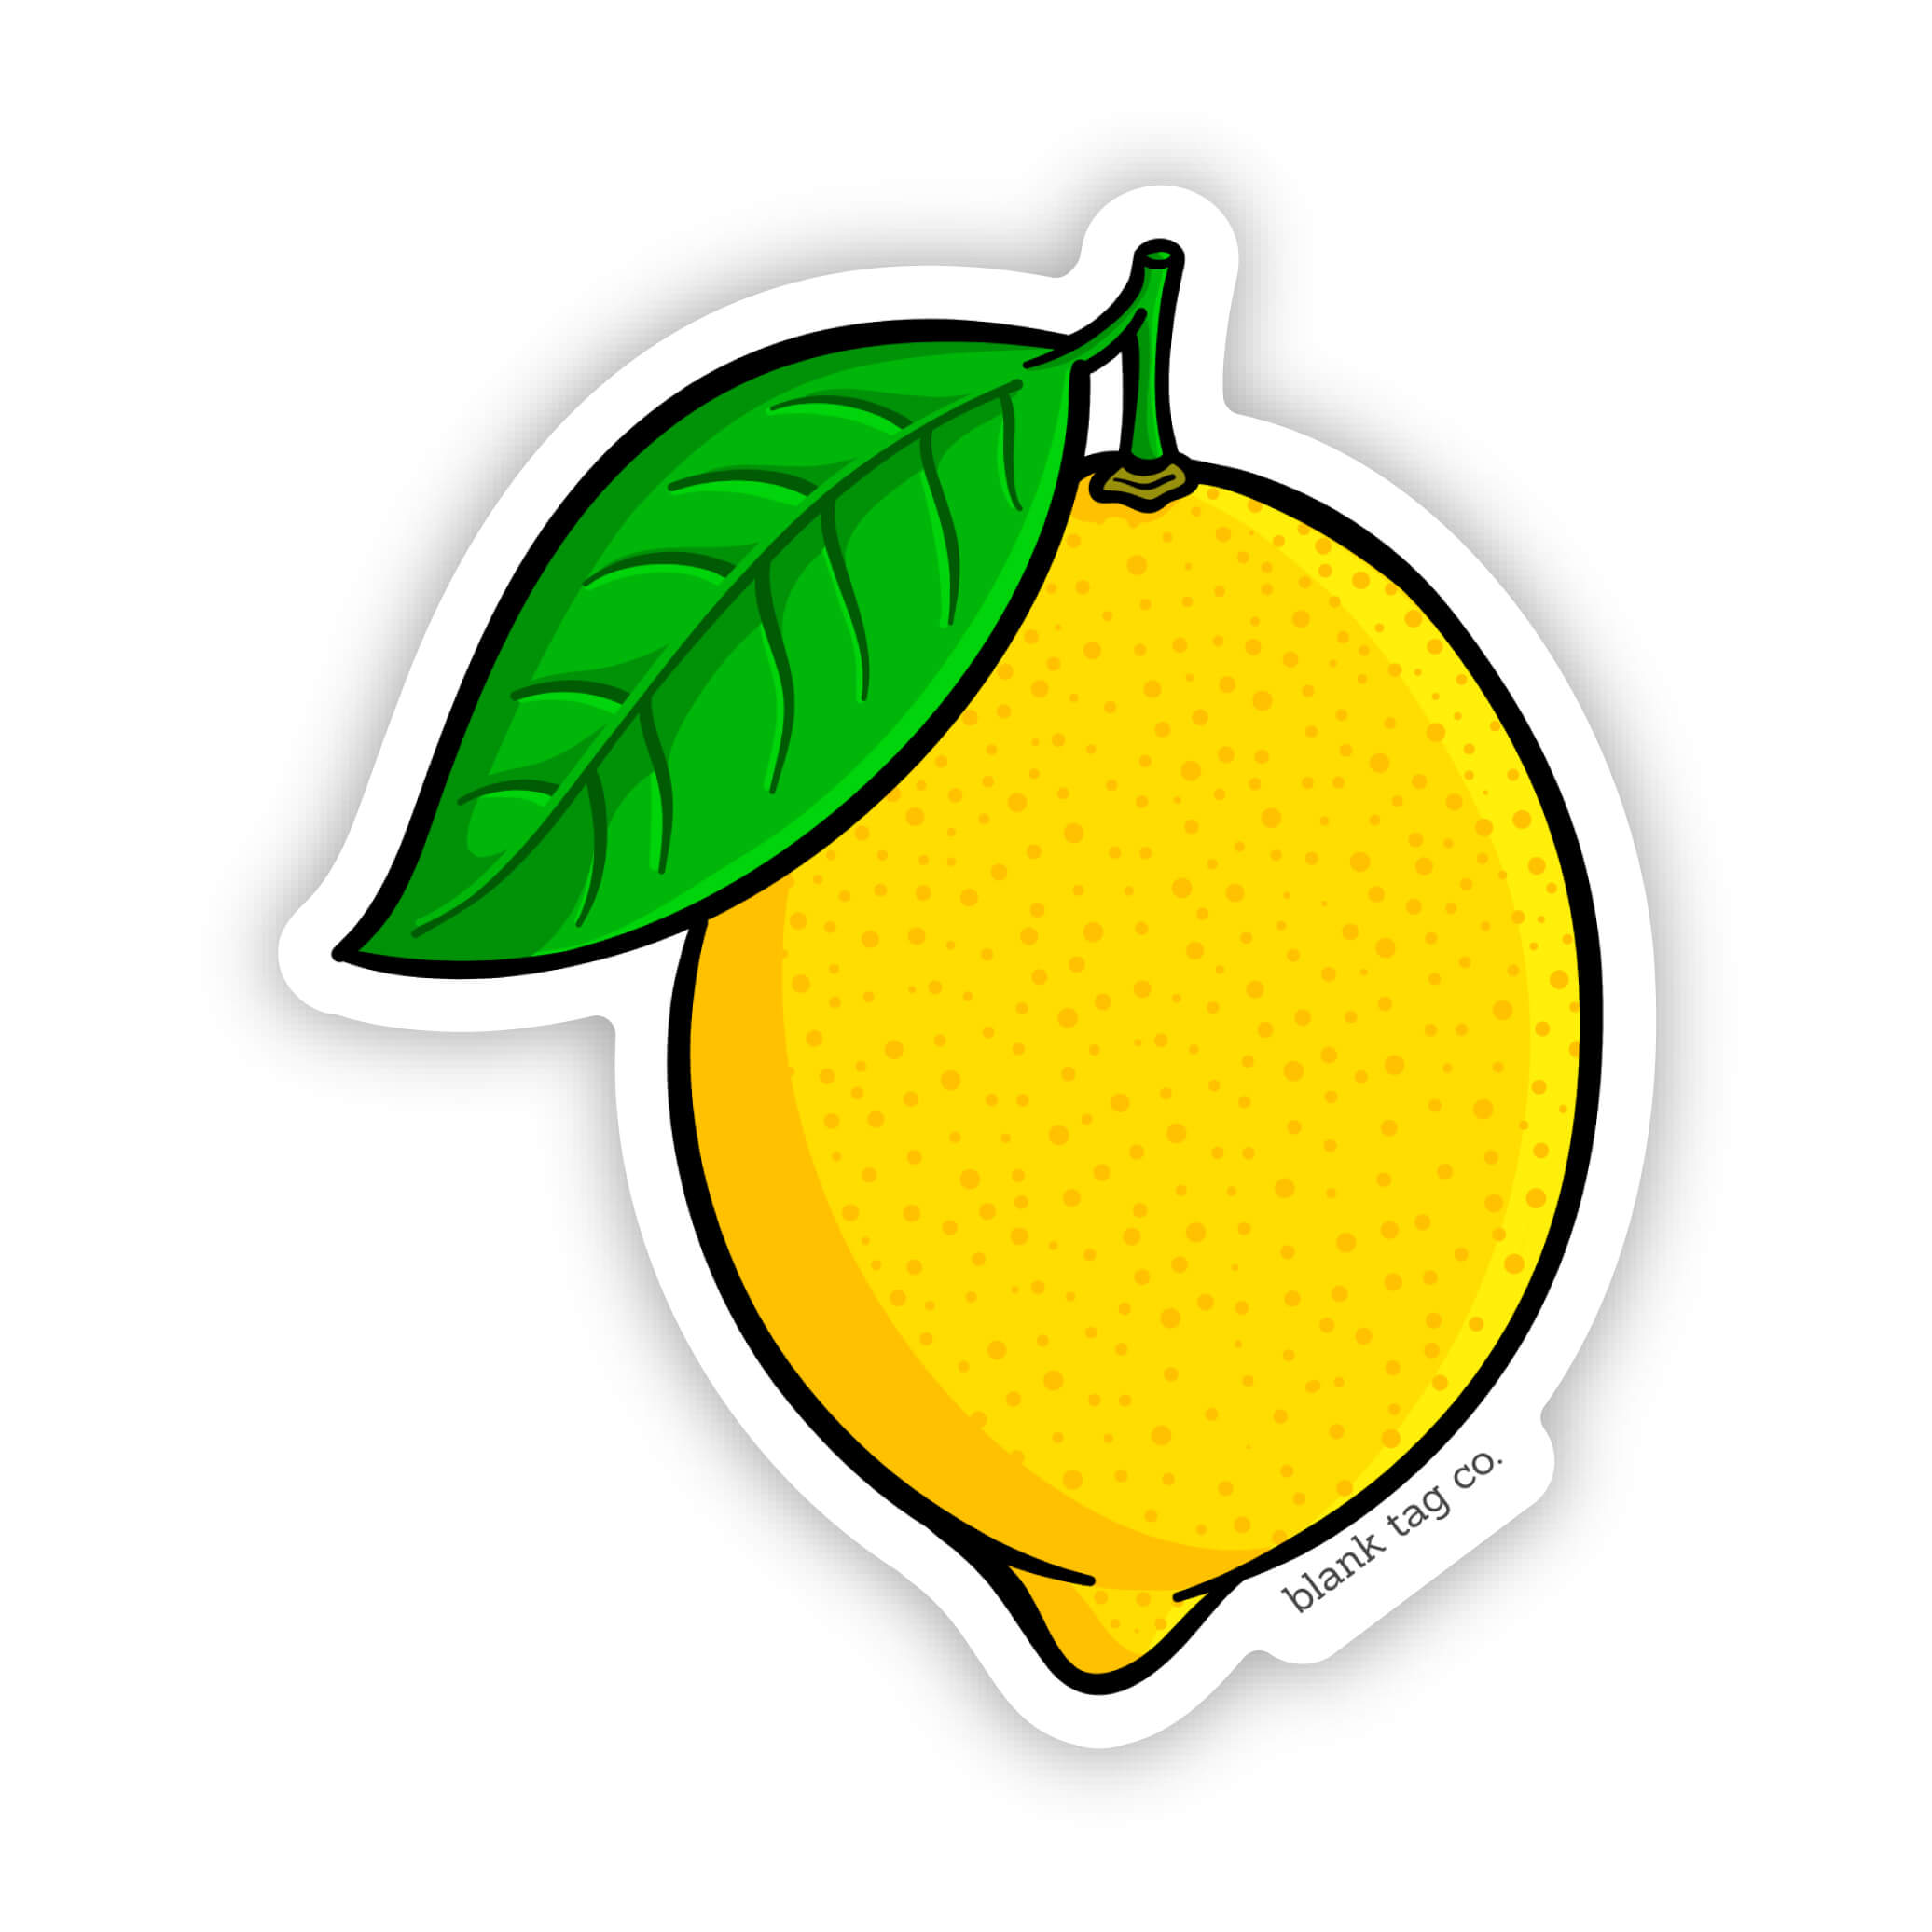 The Lemon Sticker